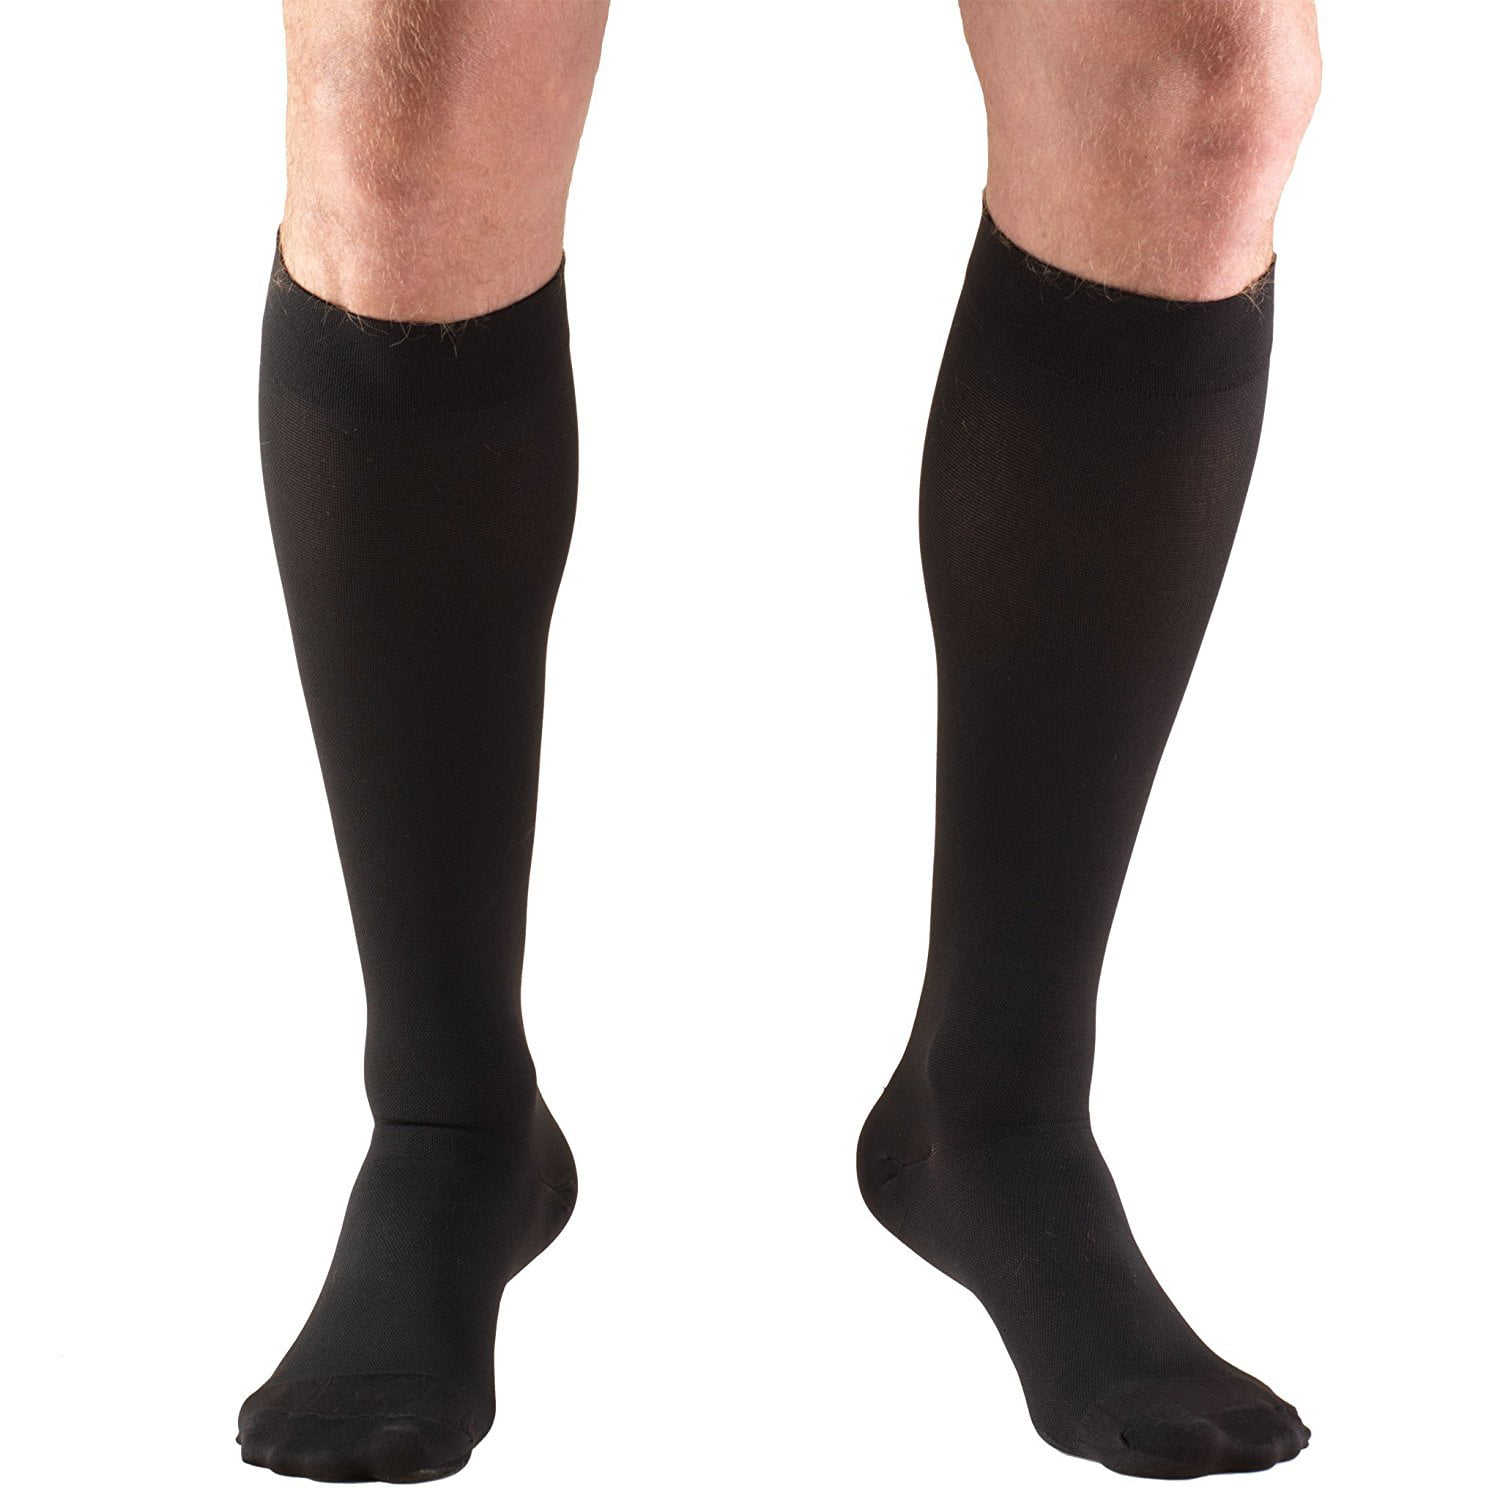 20 30 compression stockings